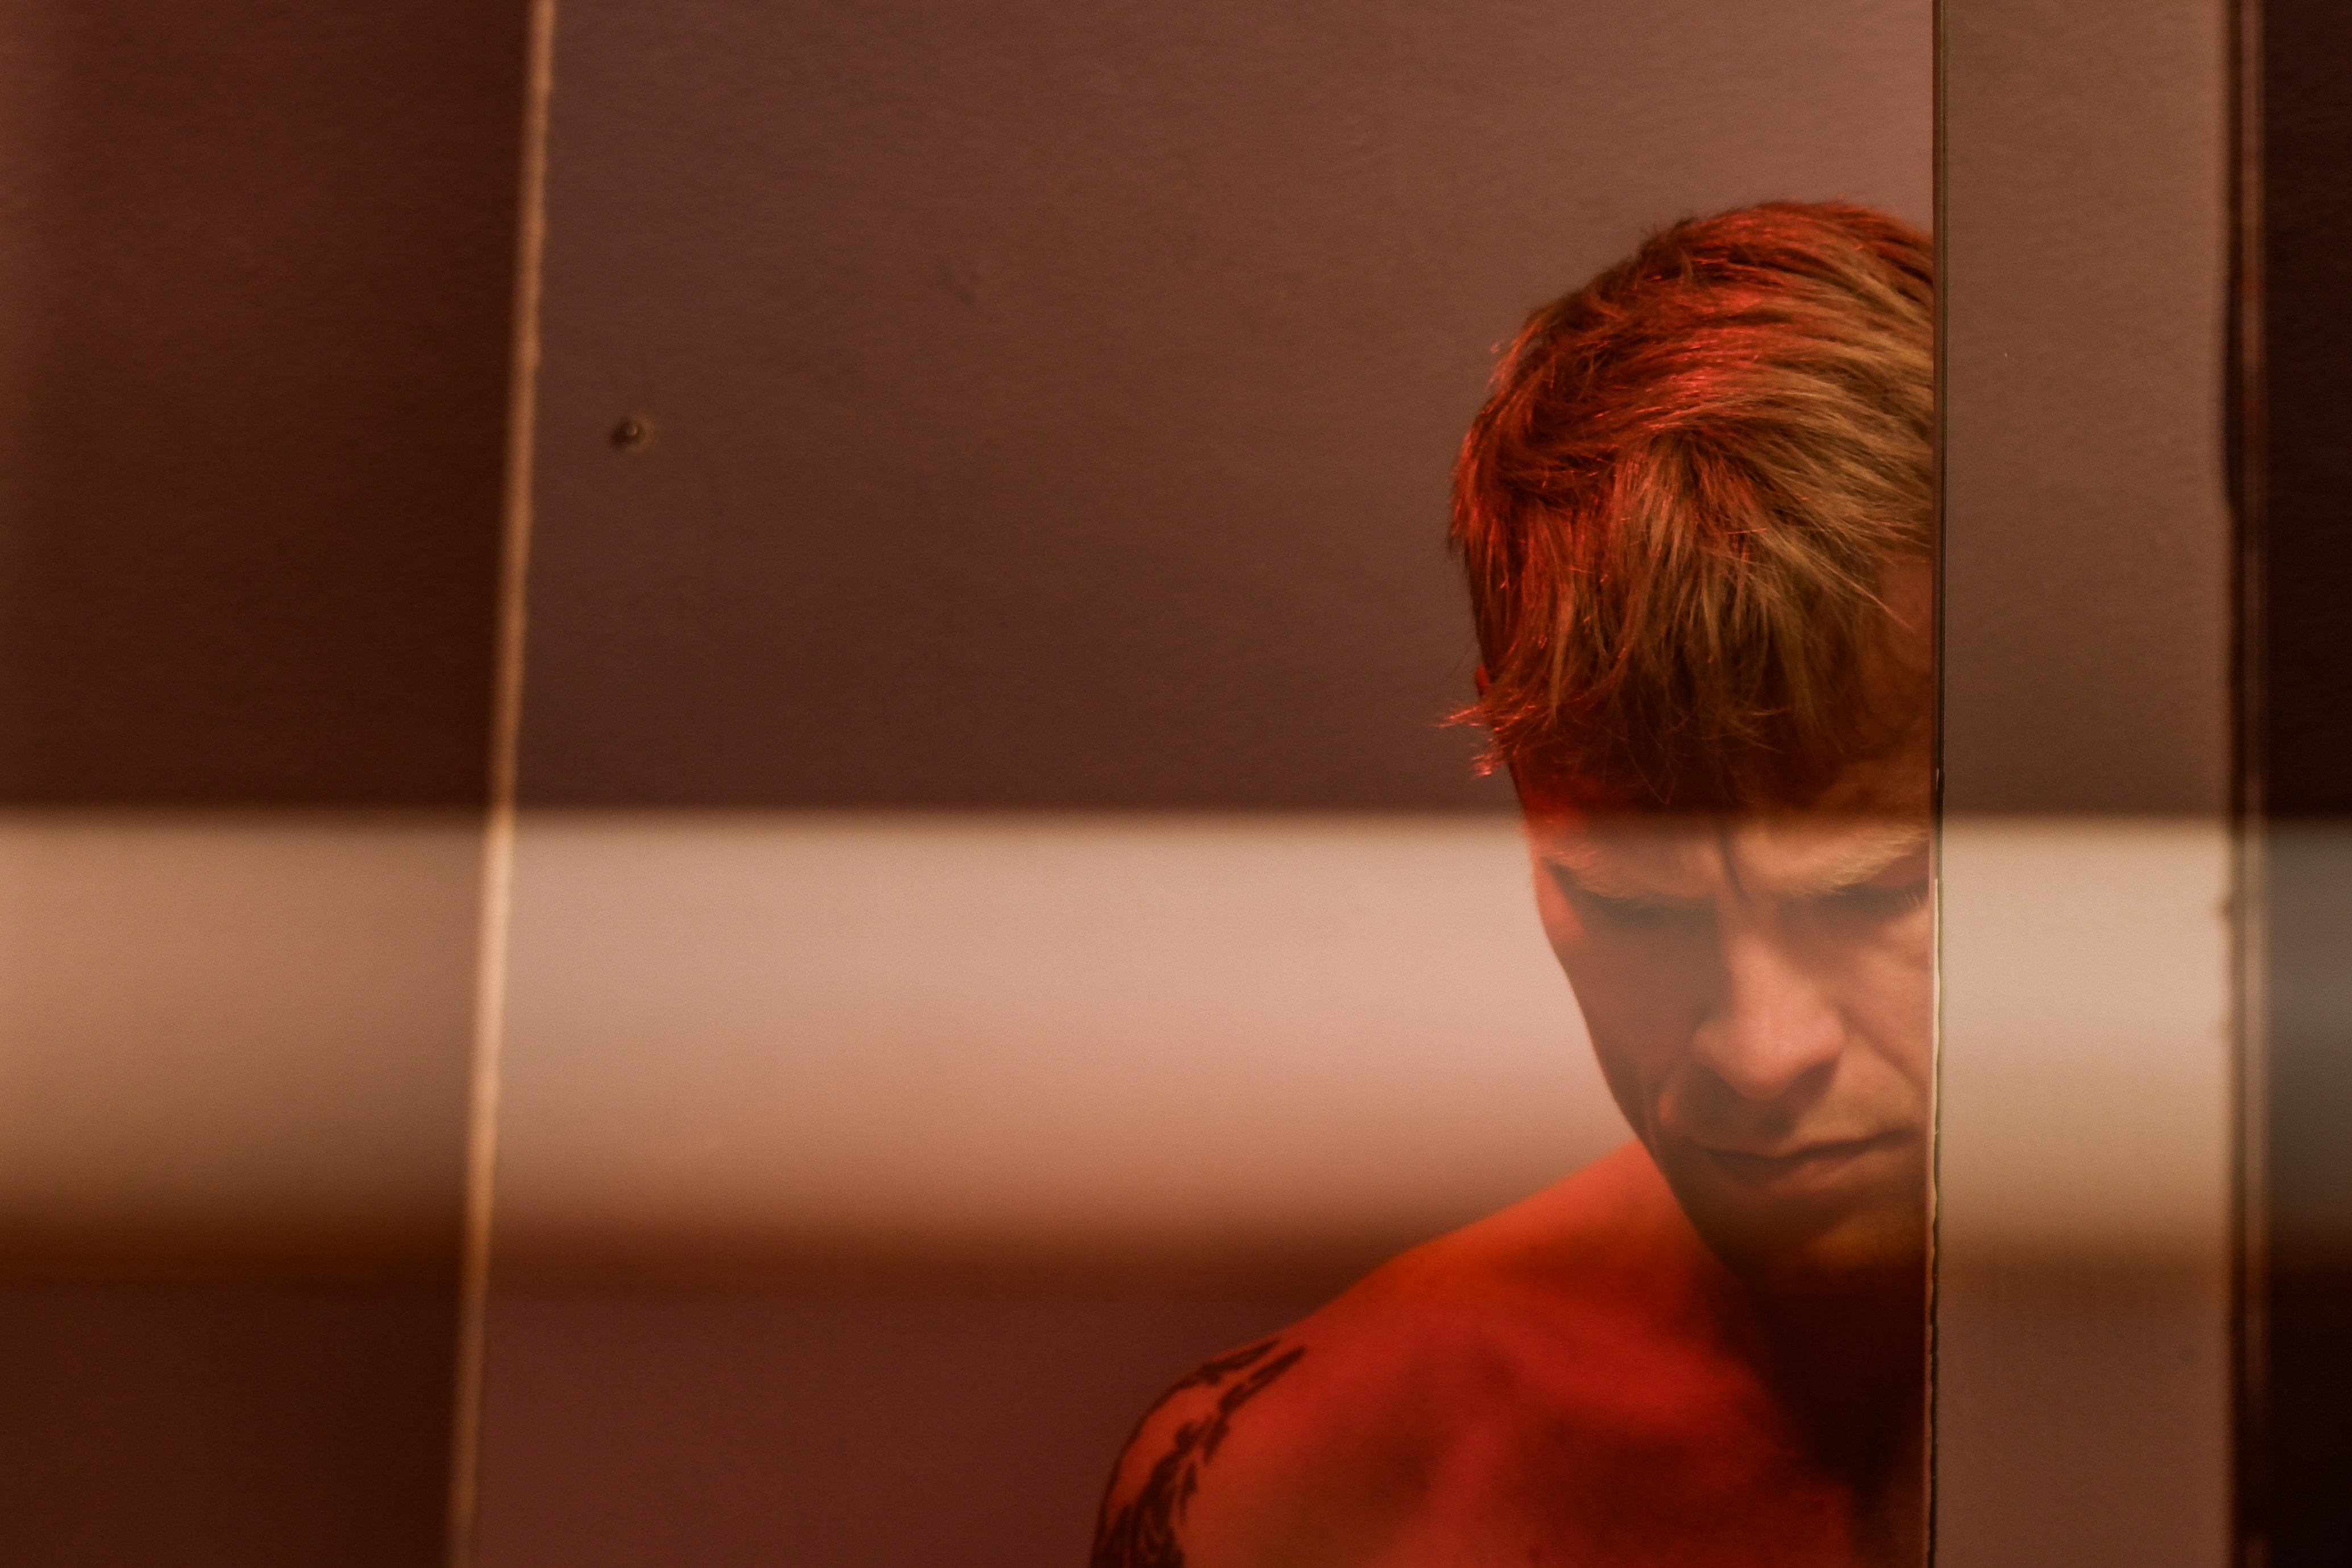 An artistic photo of Ryan Guldemond in red lighting.